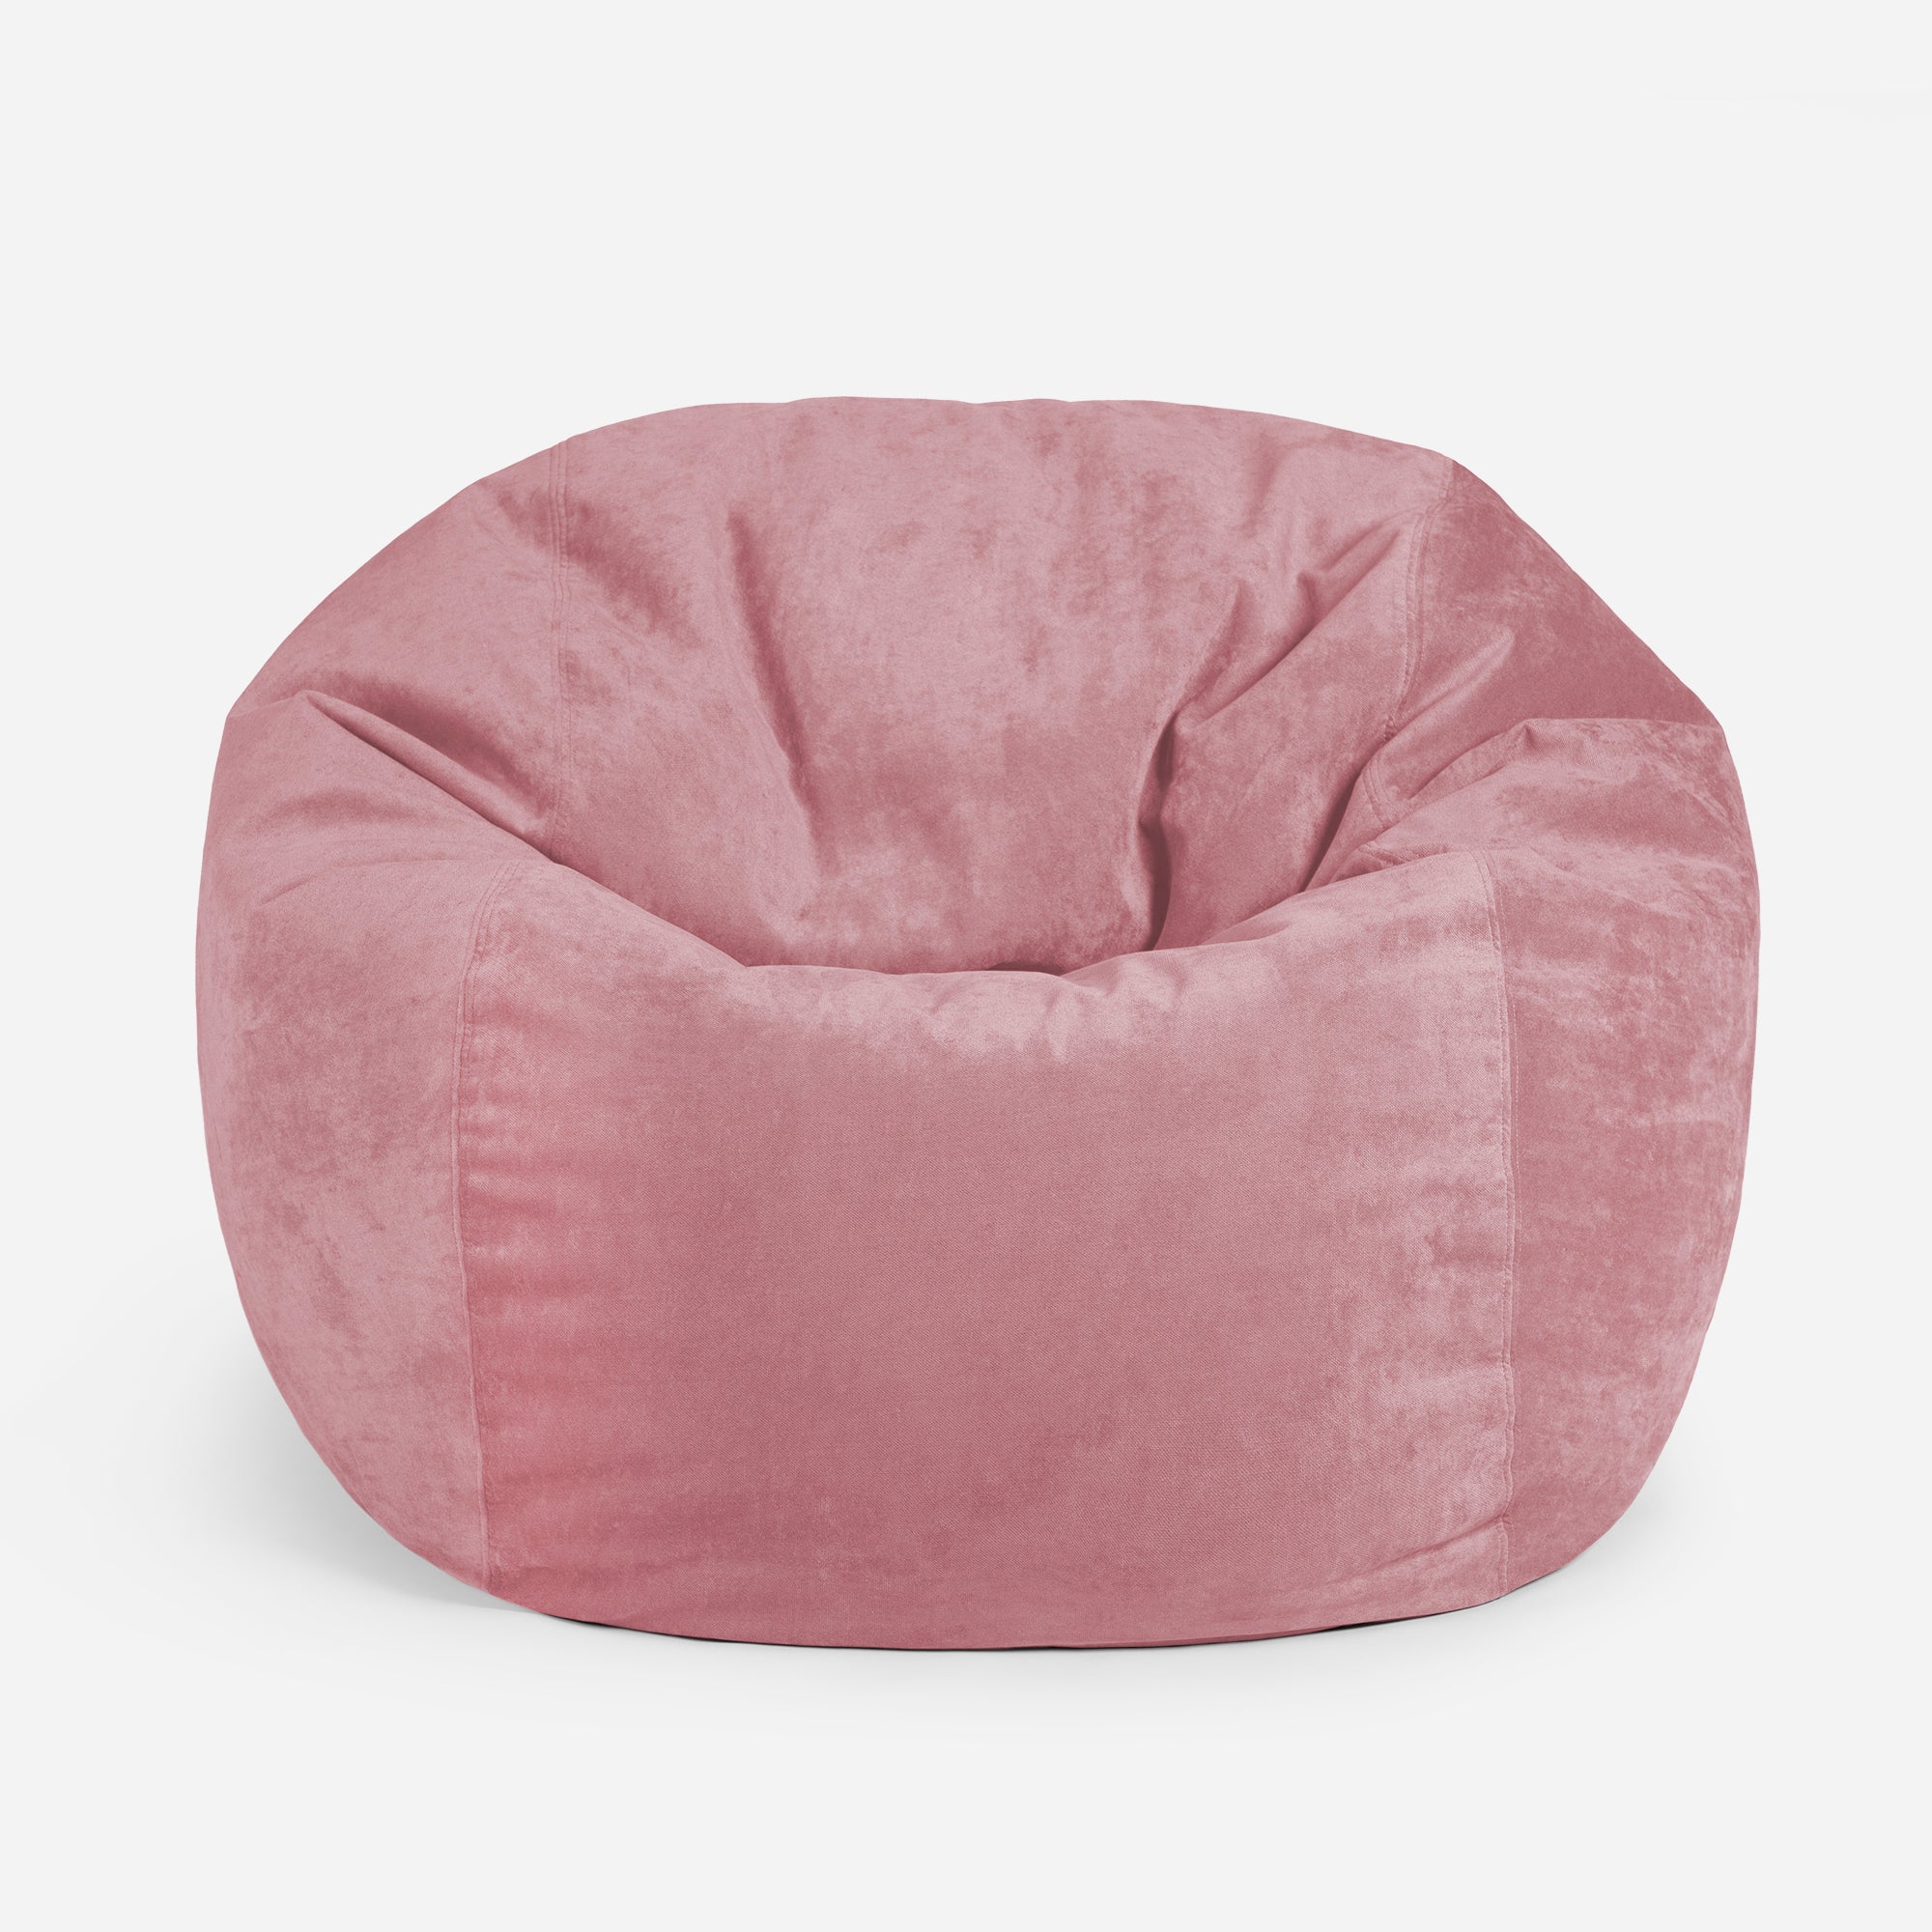 Sphere Aldo Pink Bean bag